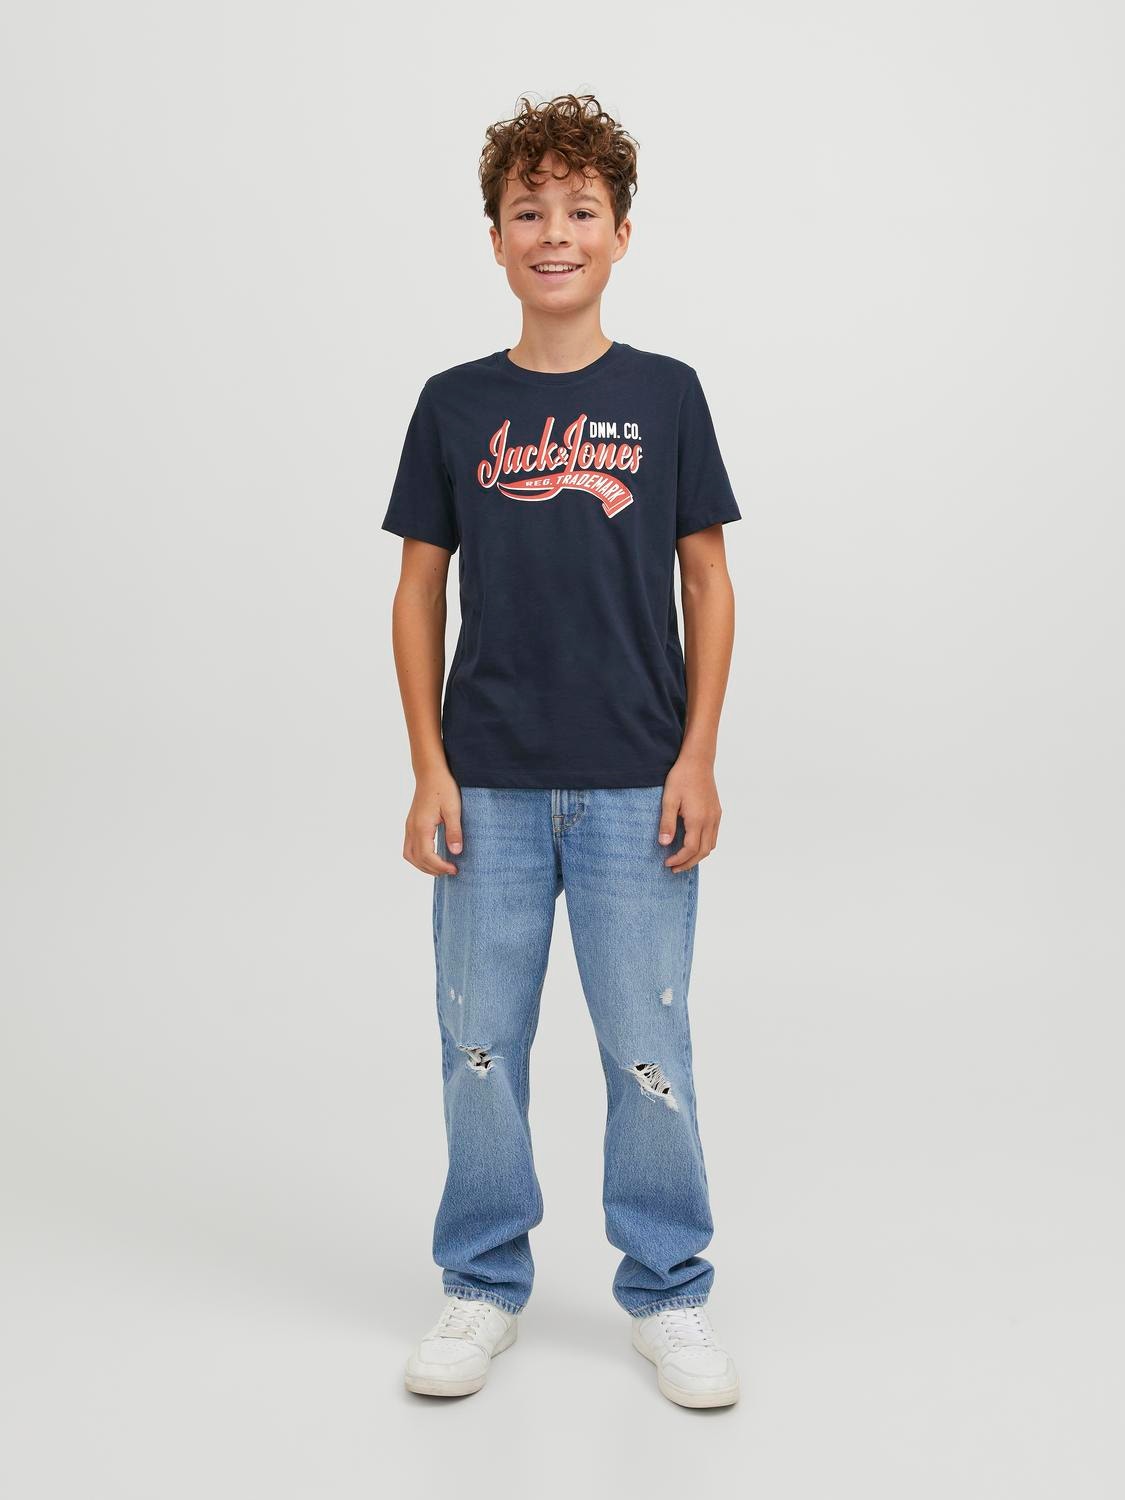 Jack & Jones Camiseta Estampado Para chicos -Navy Blazer - 12237367